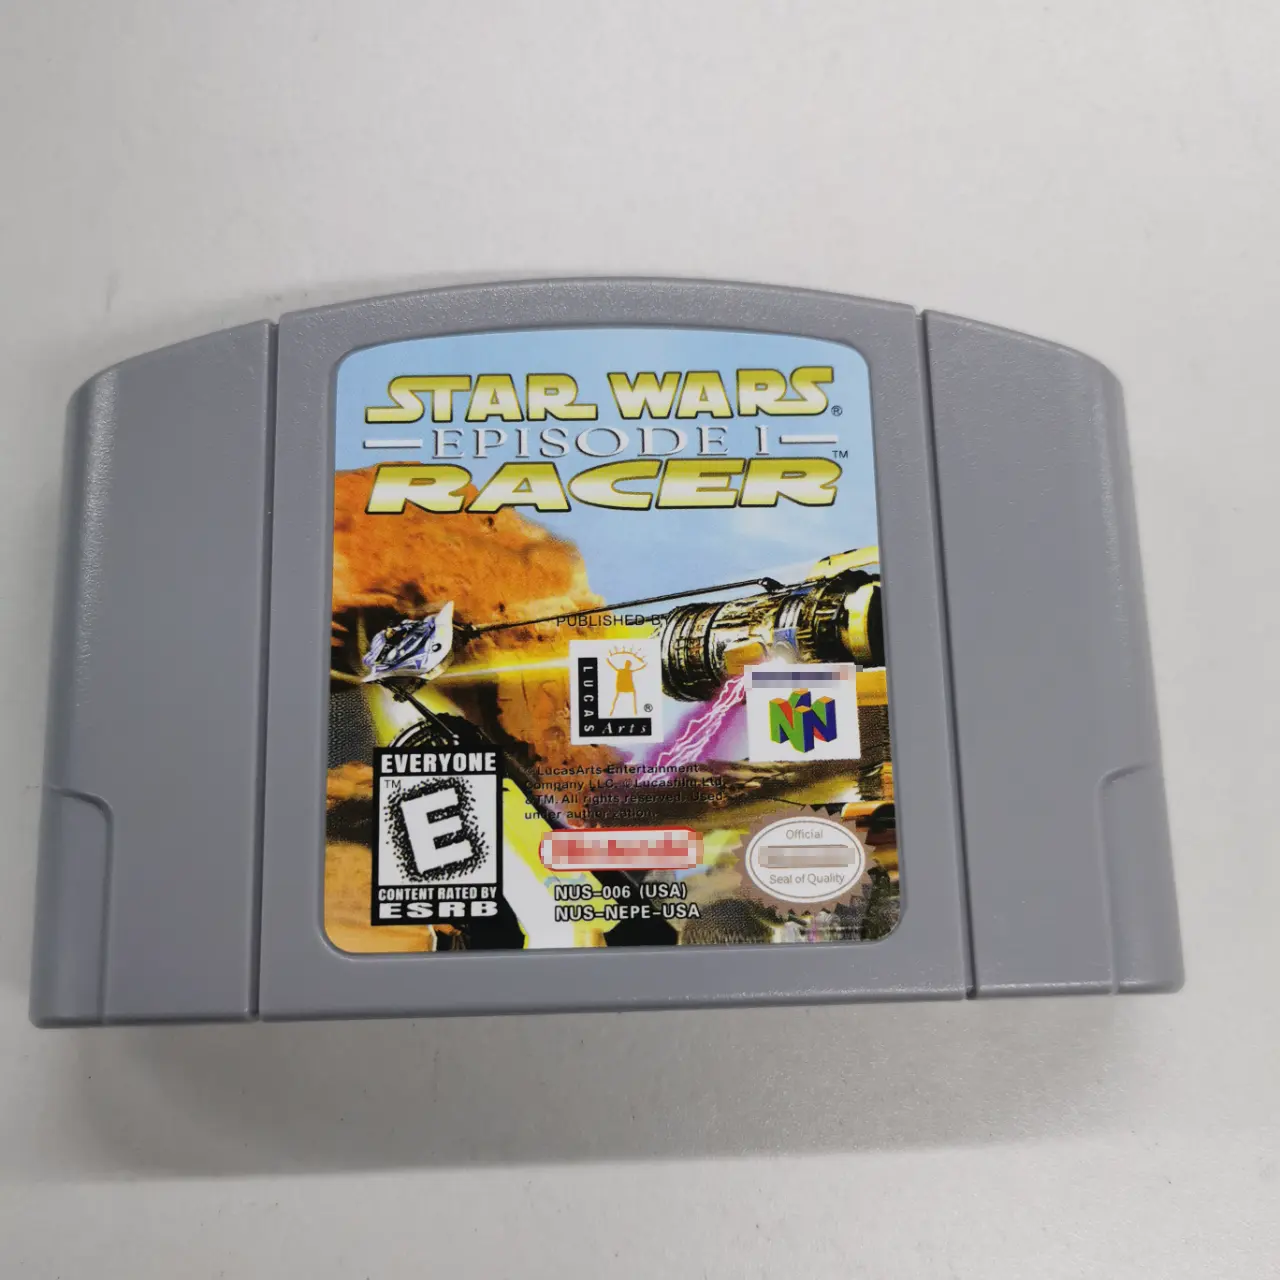 StarWars Episode I - Racer N64 Game Cartridge card for Nintendo 64 US Version